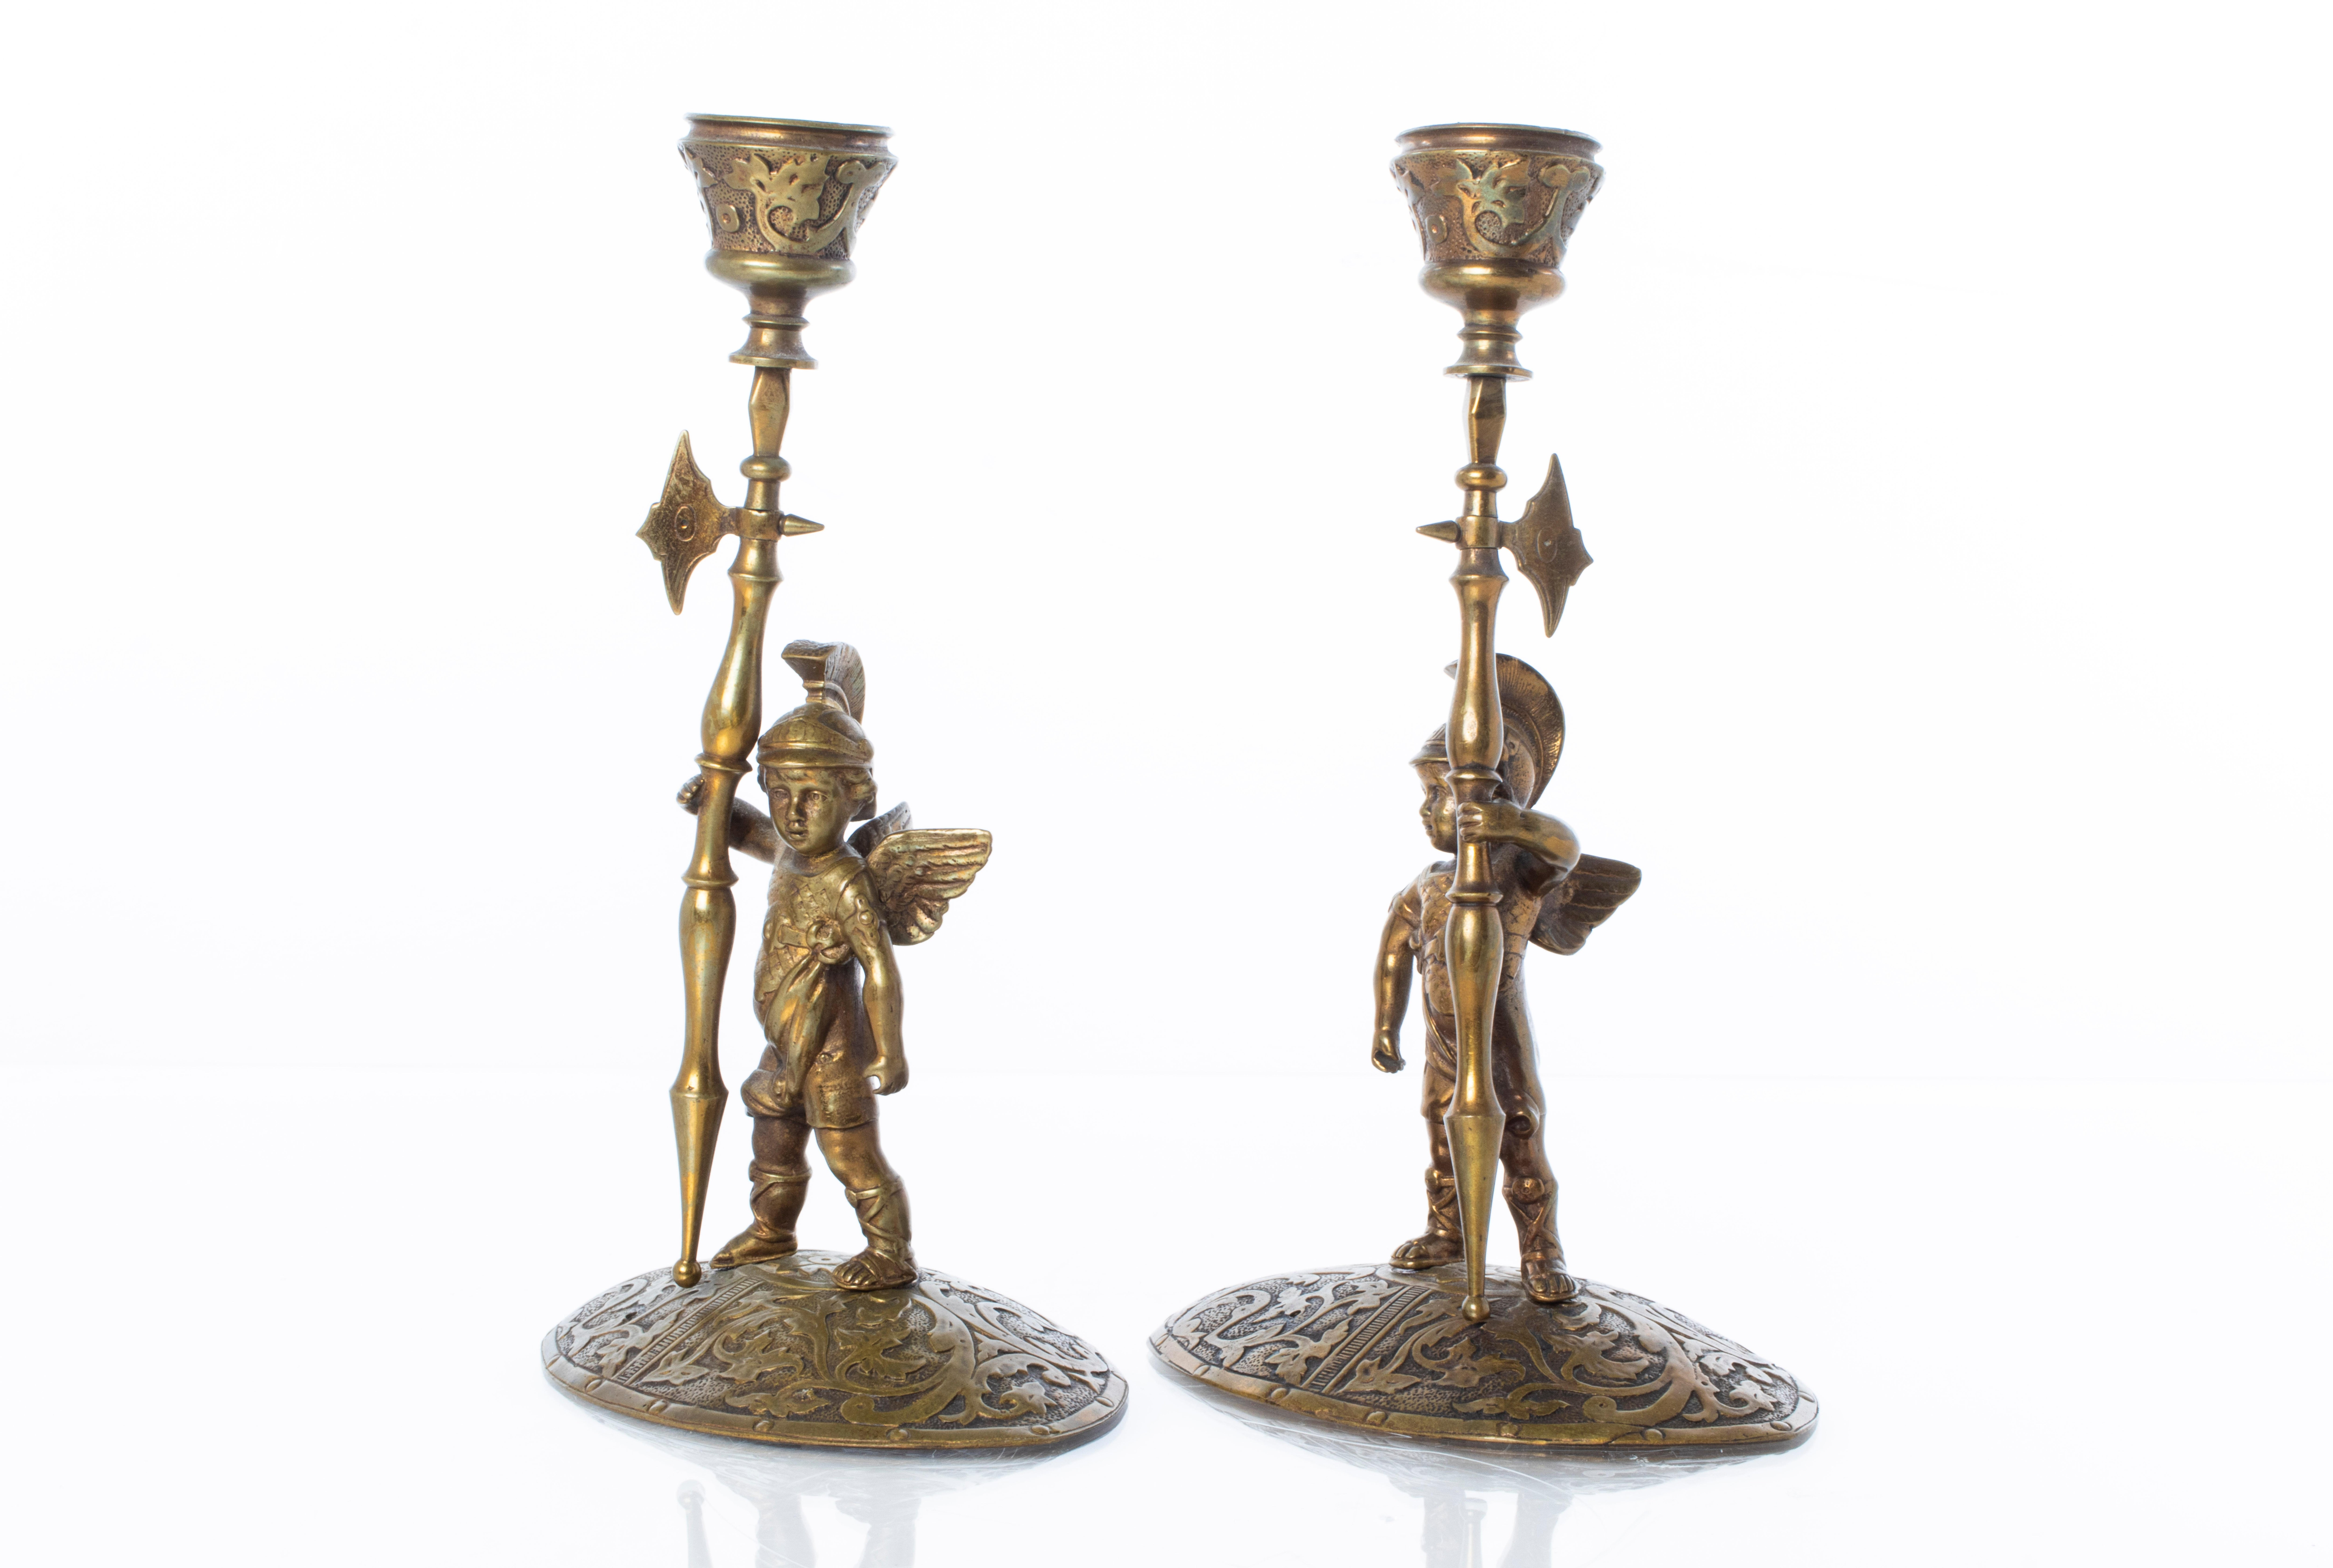 Renaissance Revival figural bronze candlesticks depicting allegorical representations of gladiators or other warriors, raised on bases modeled as armor epaulettes. Measures: 9